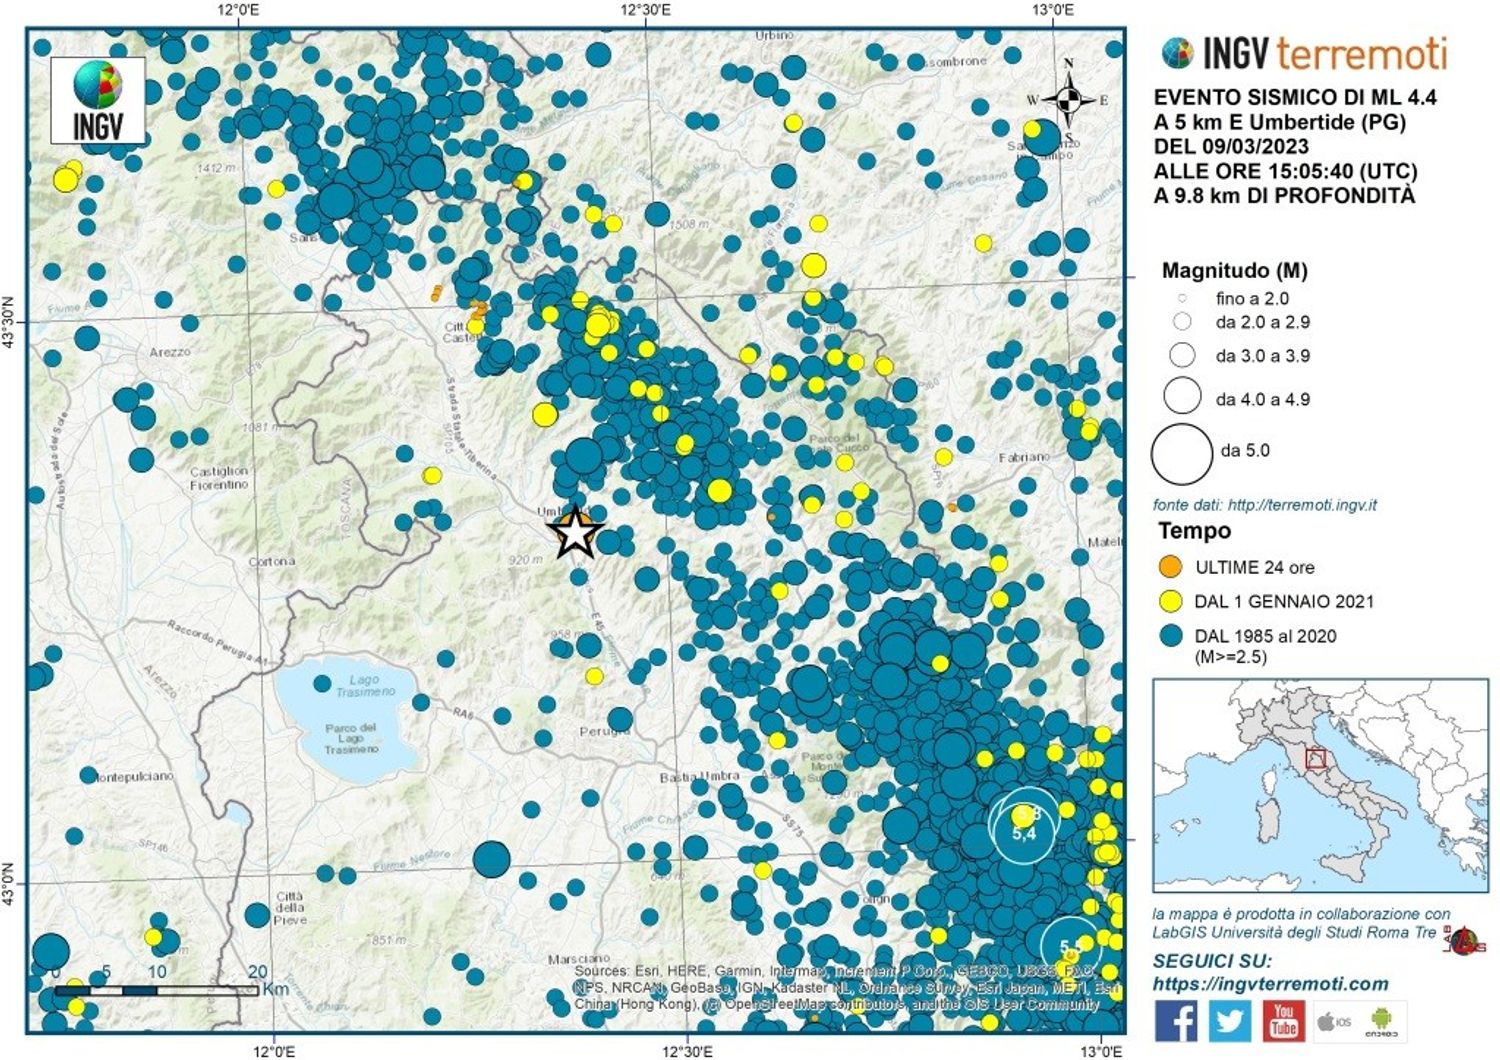 L'area del terremoto elaborata da INGV